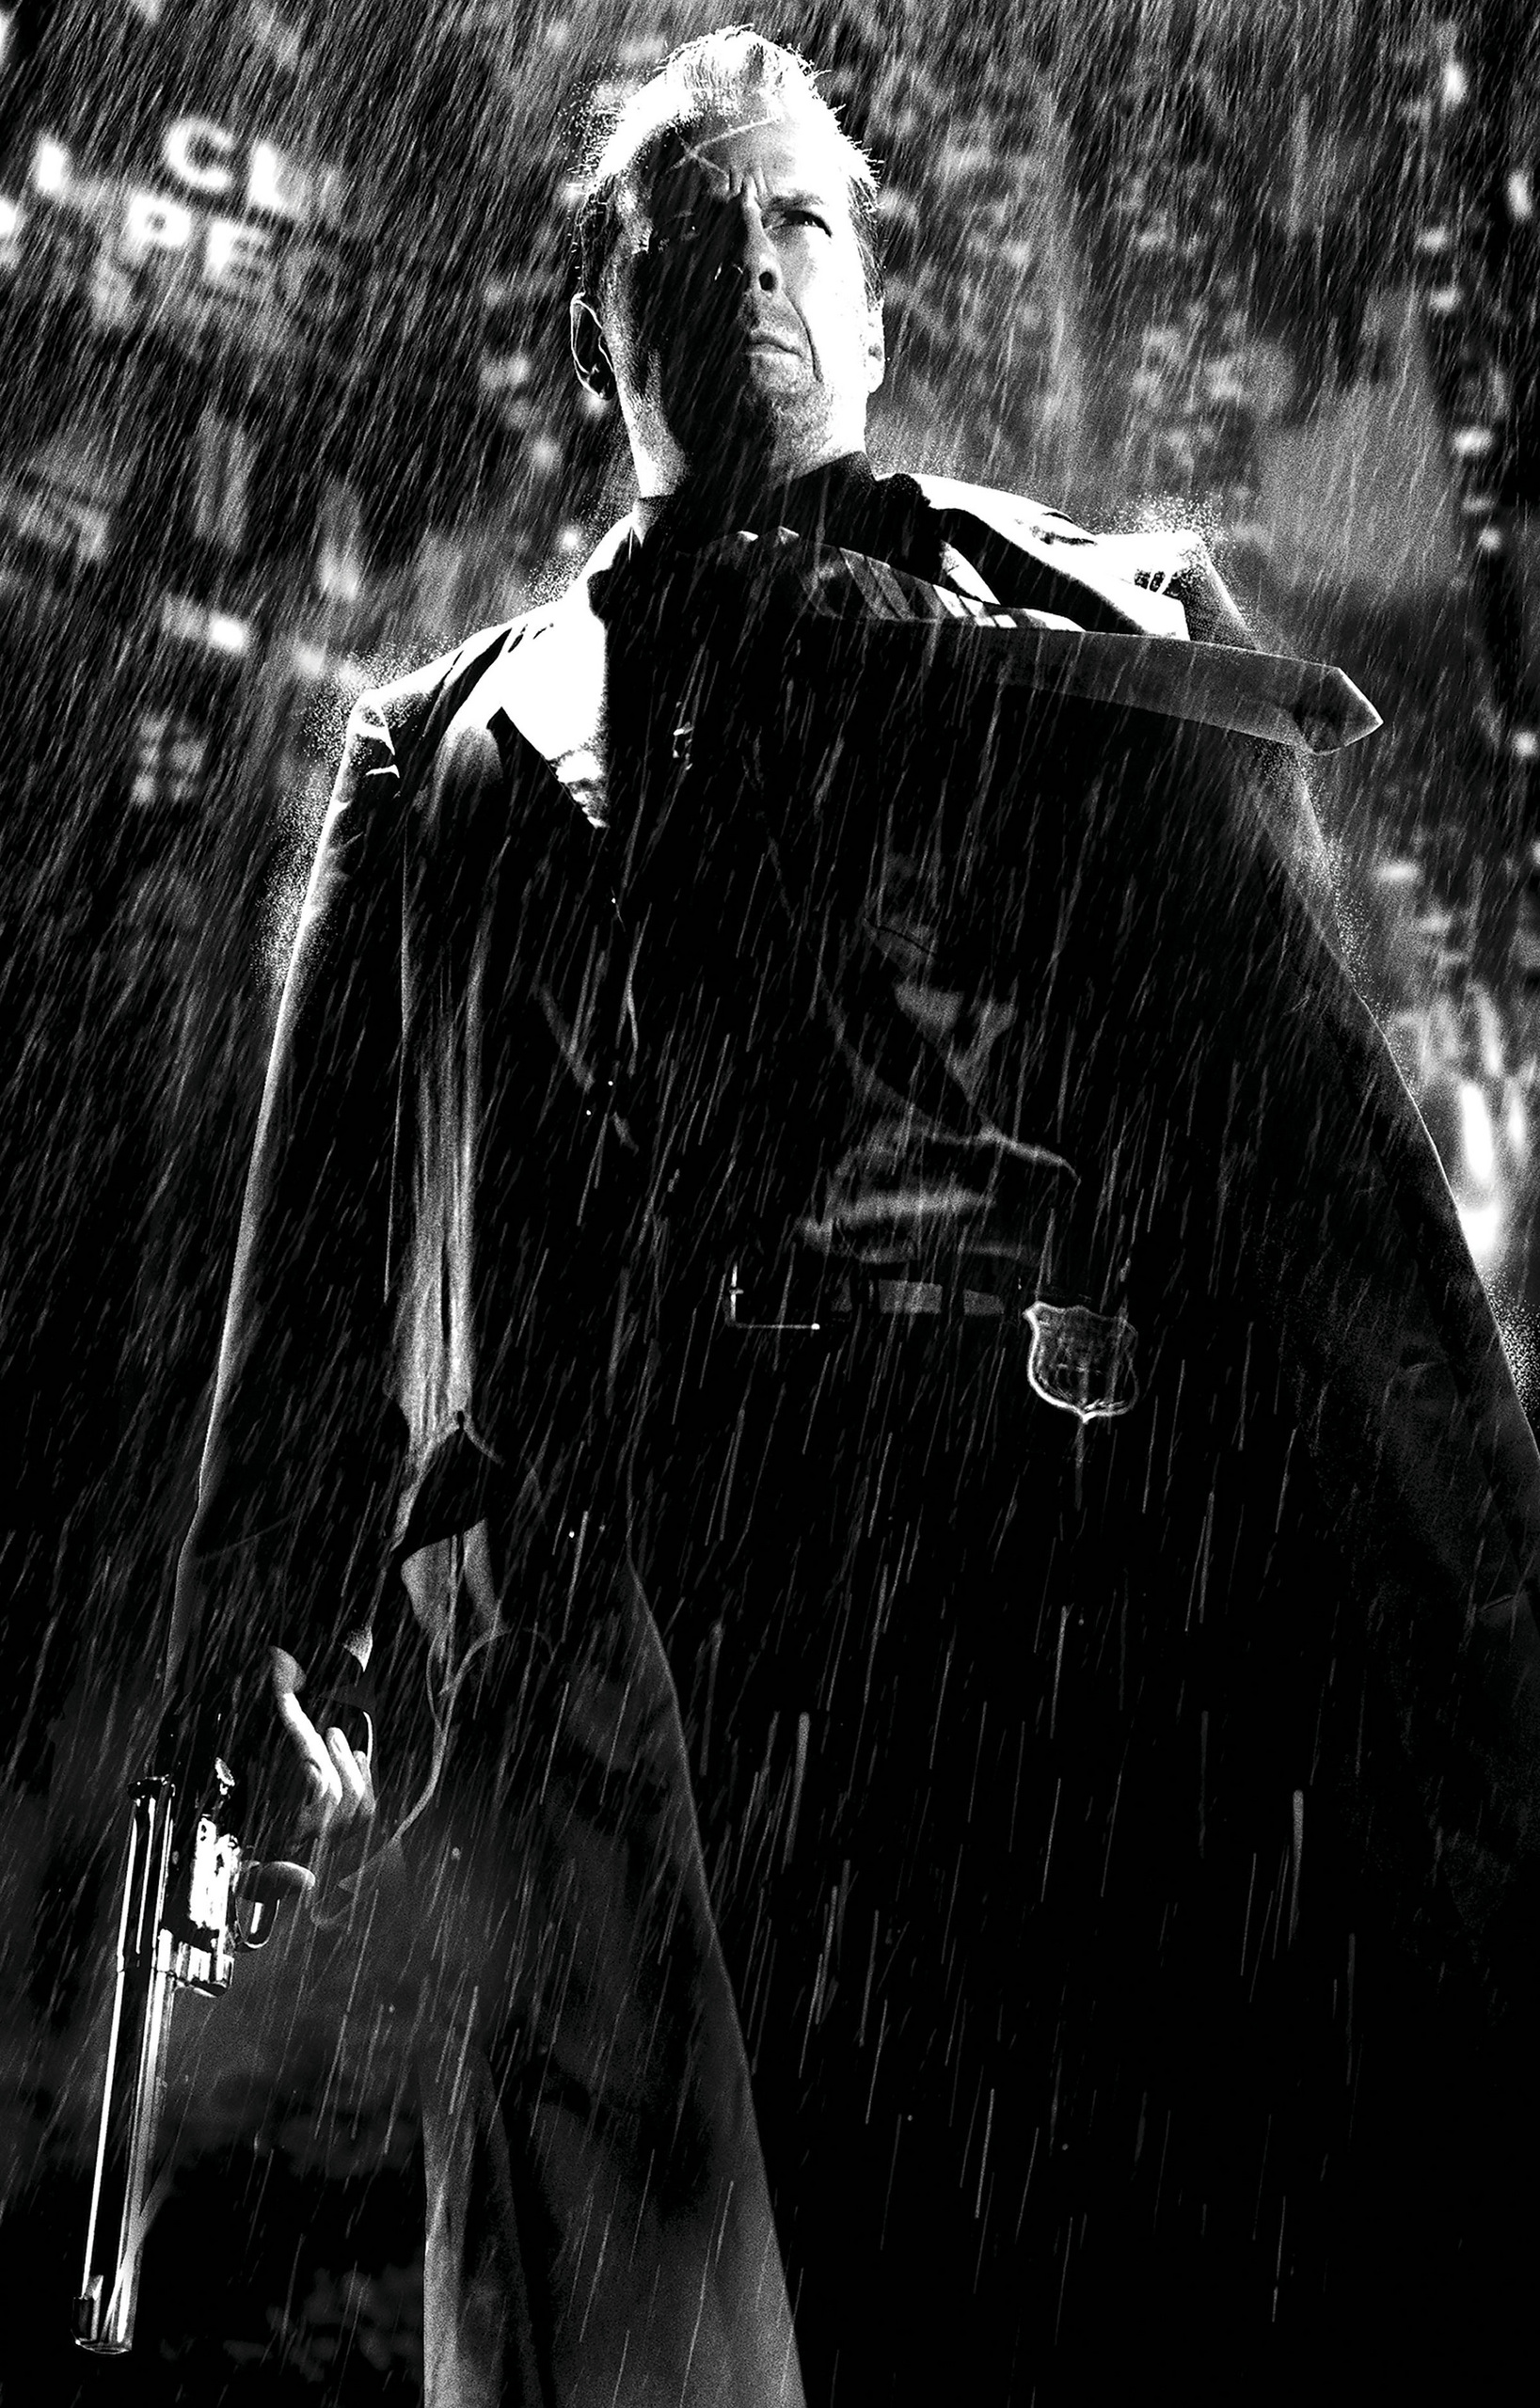 Sin City Image John Hartigan HD Wallpaper And Background Photos